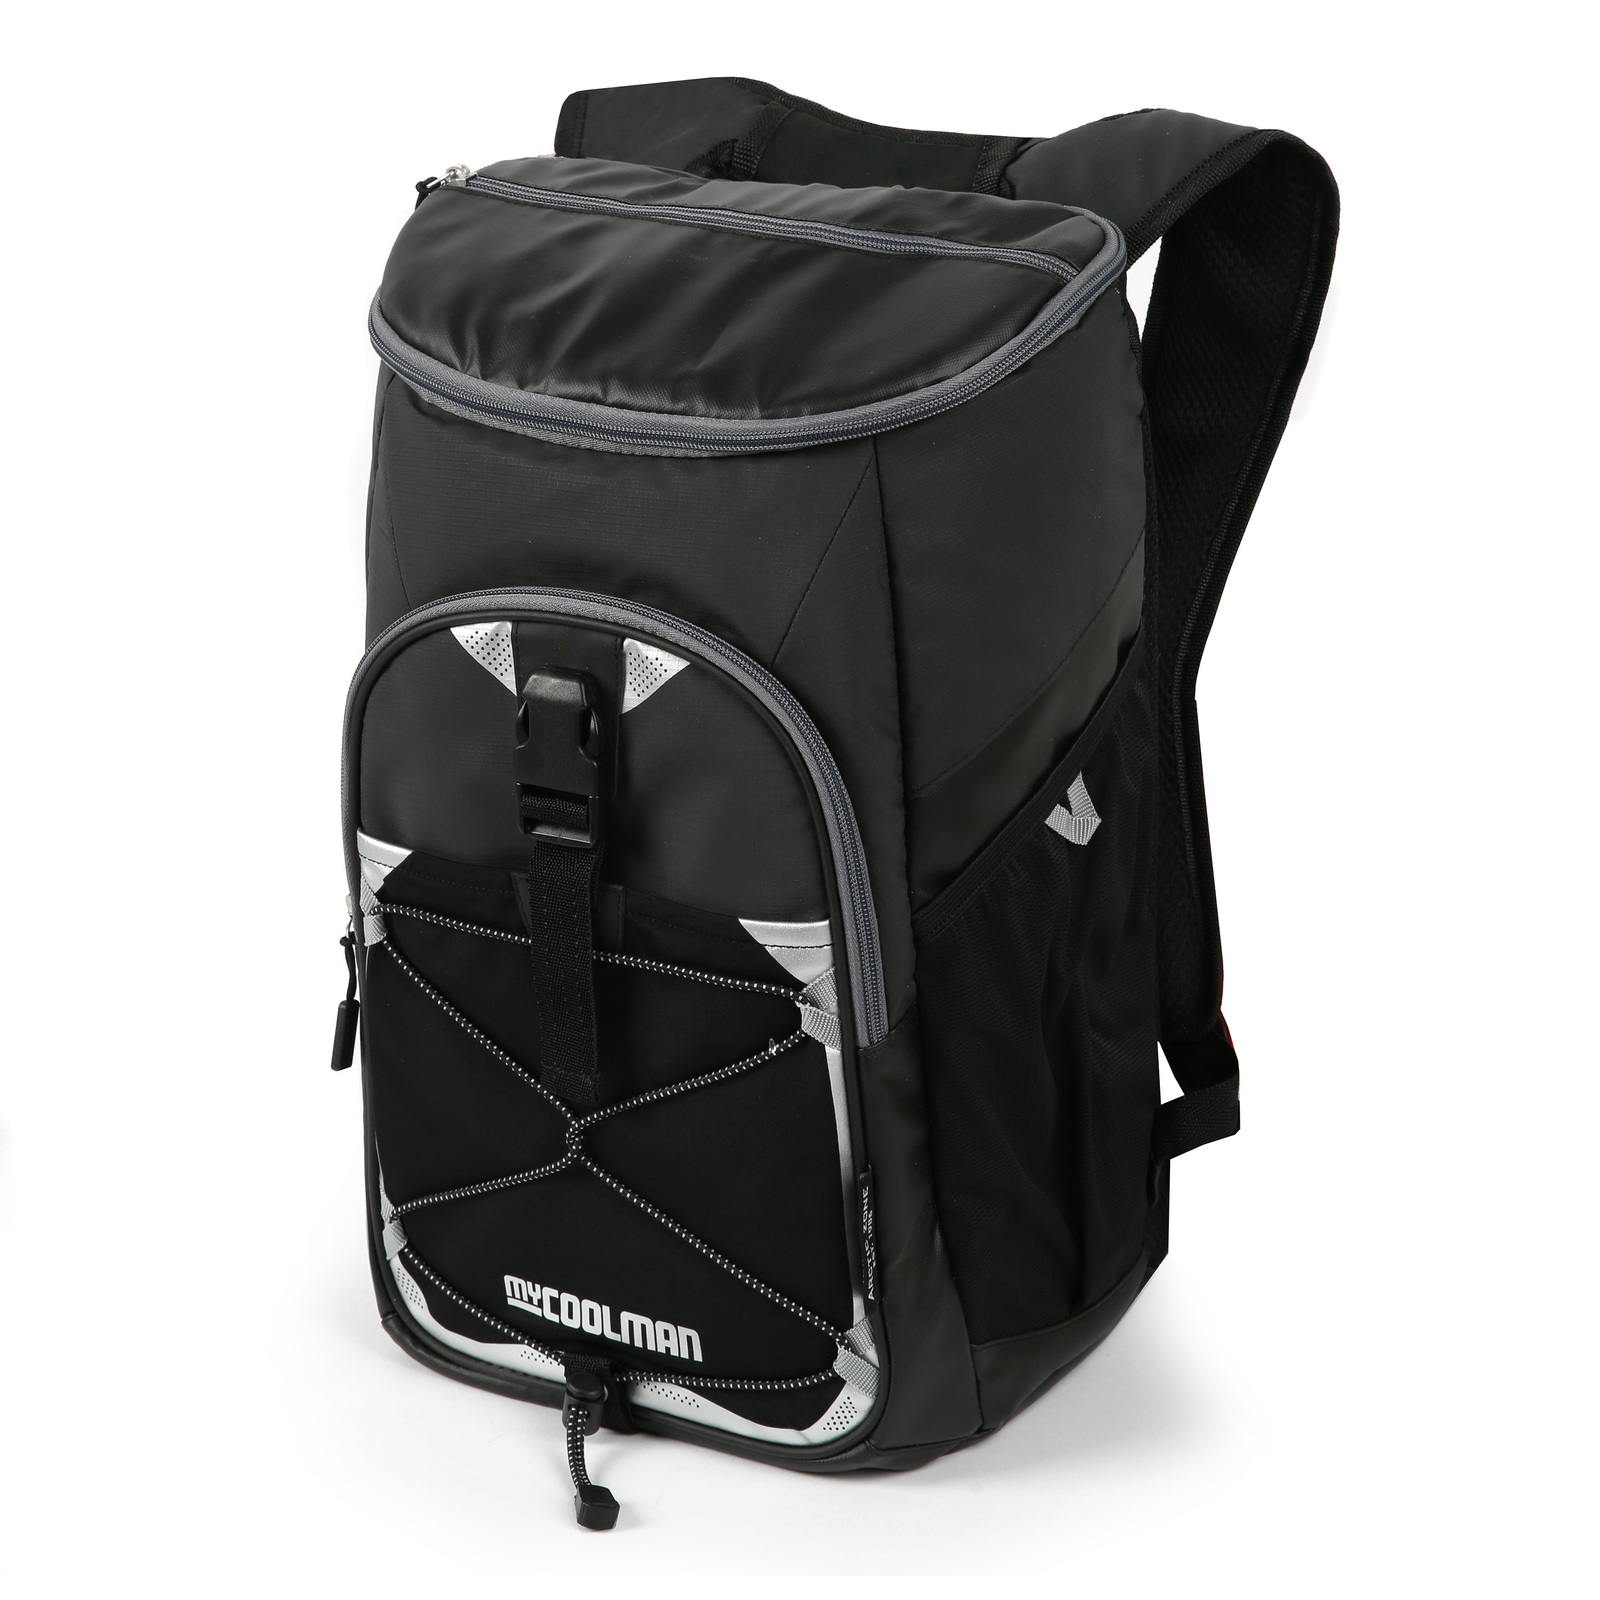 hidden-myCOOLMAN Backpack Cooler